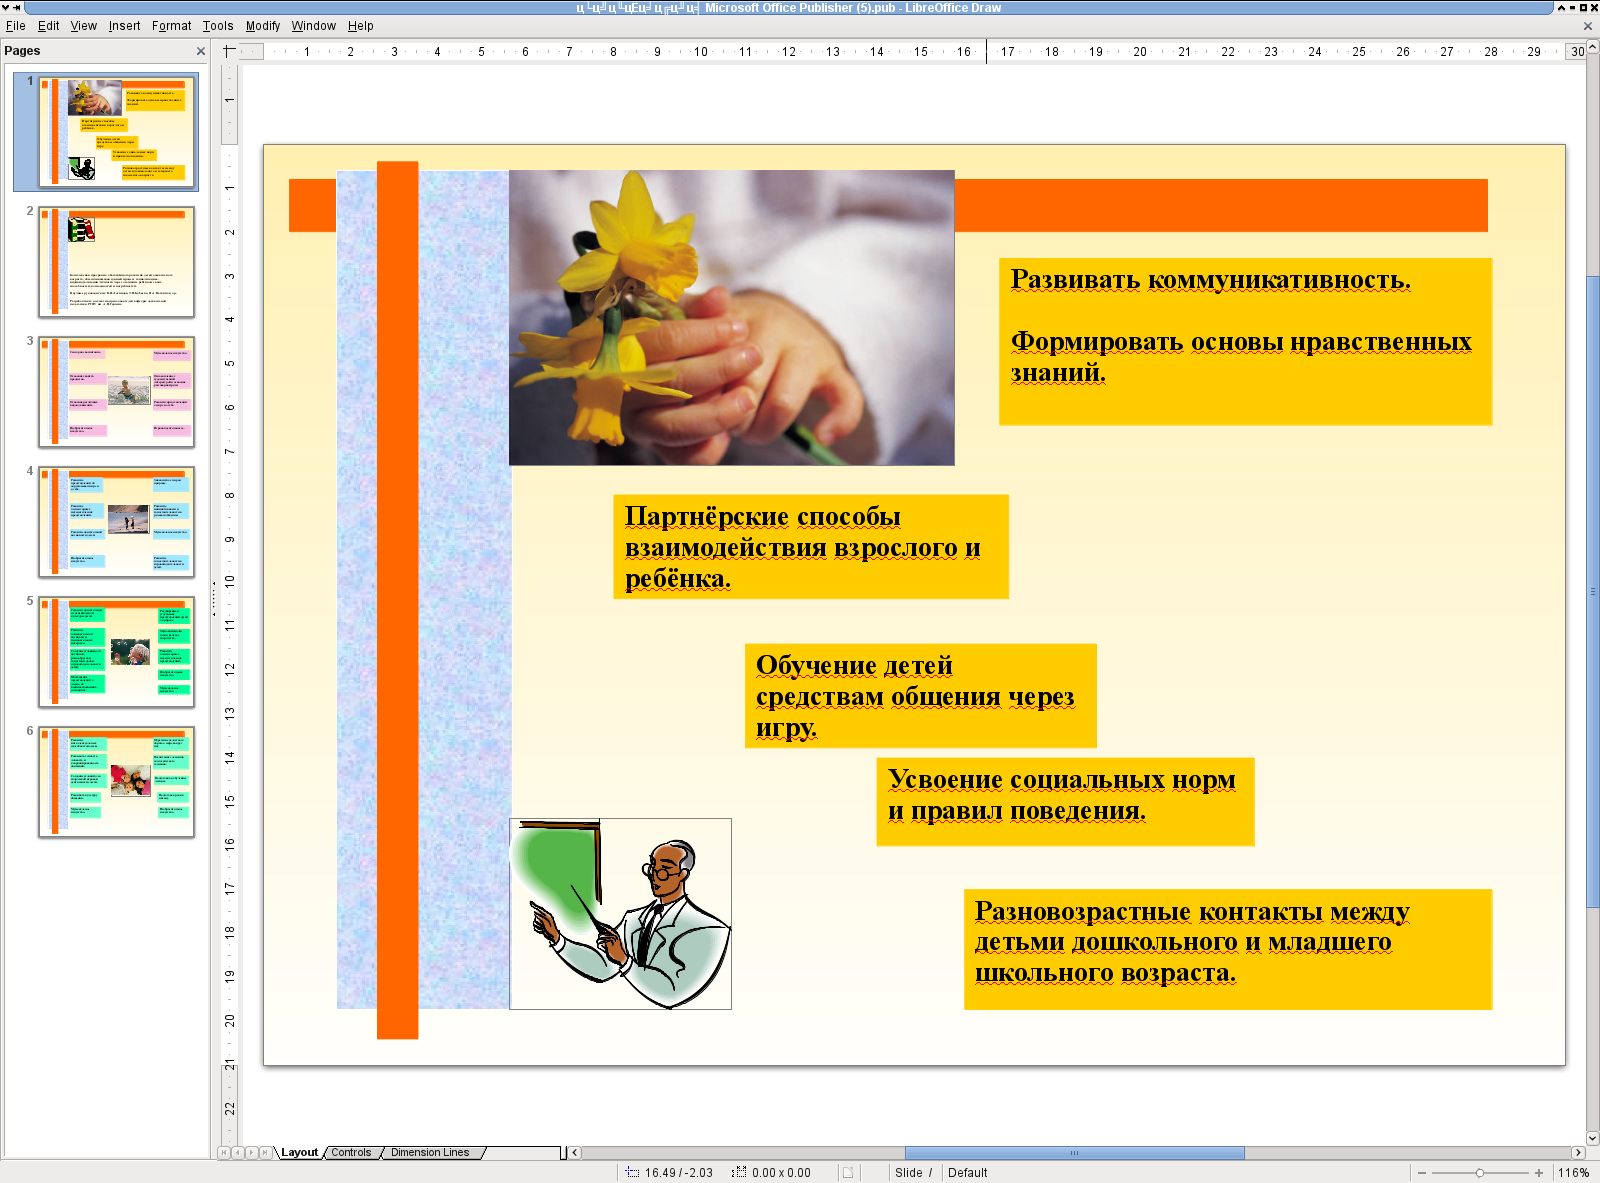 Risorsa grafica - foto, screenshot o immagine in genere - relativa ai contenuti pubblicati da unixzone.it | Nome immagine: news1476_LibreOffice-4.0.0_screenshot_2.png